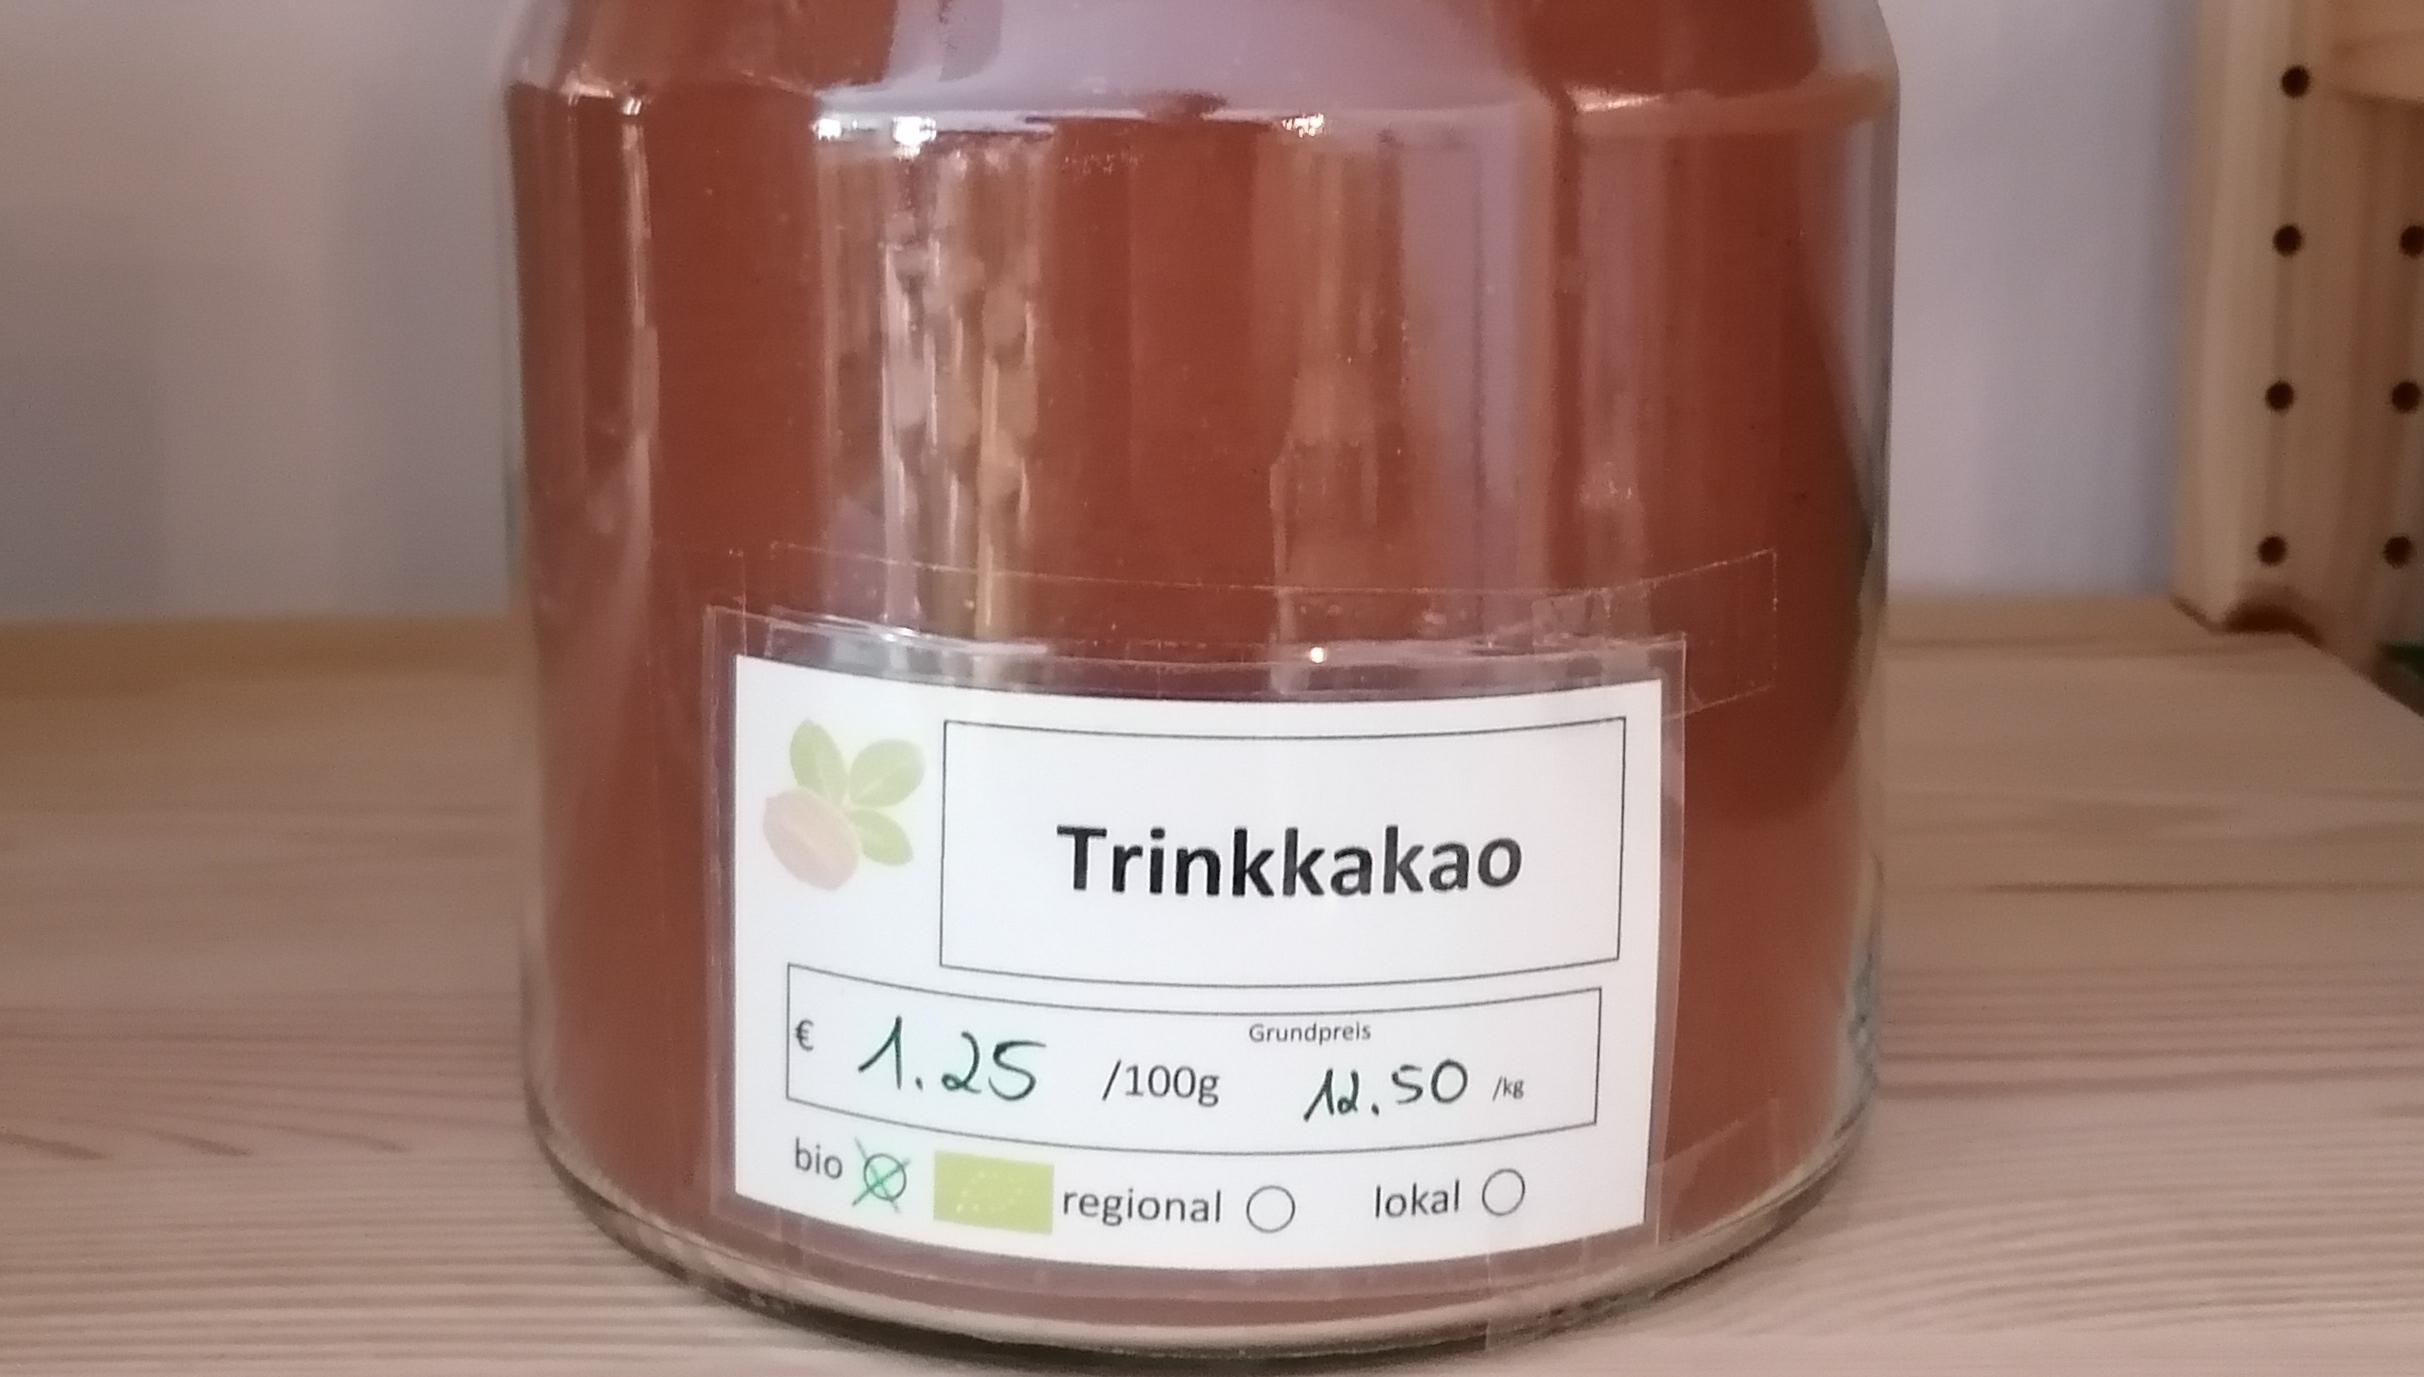 Trinkkakao